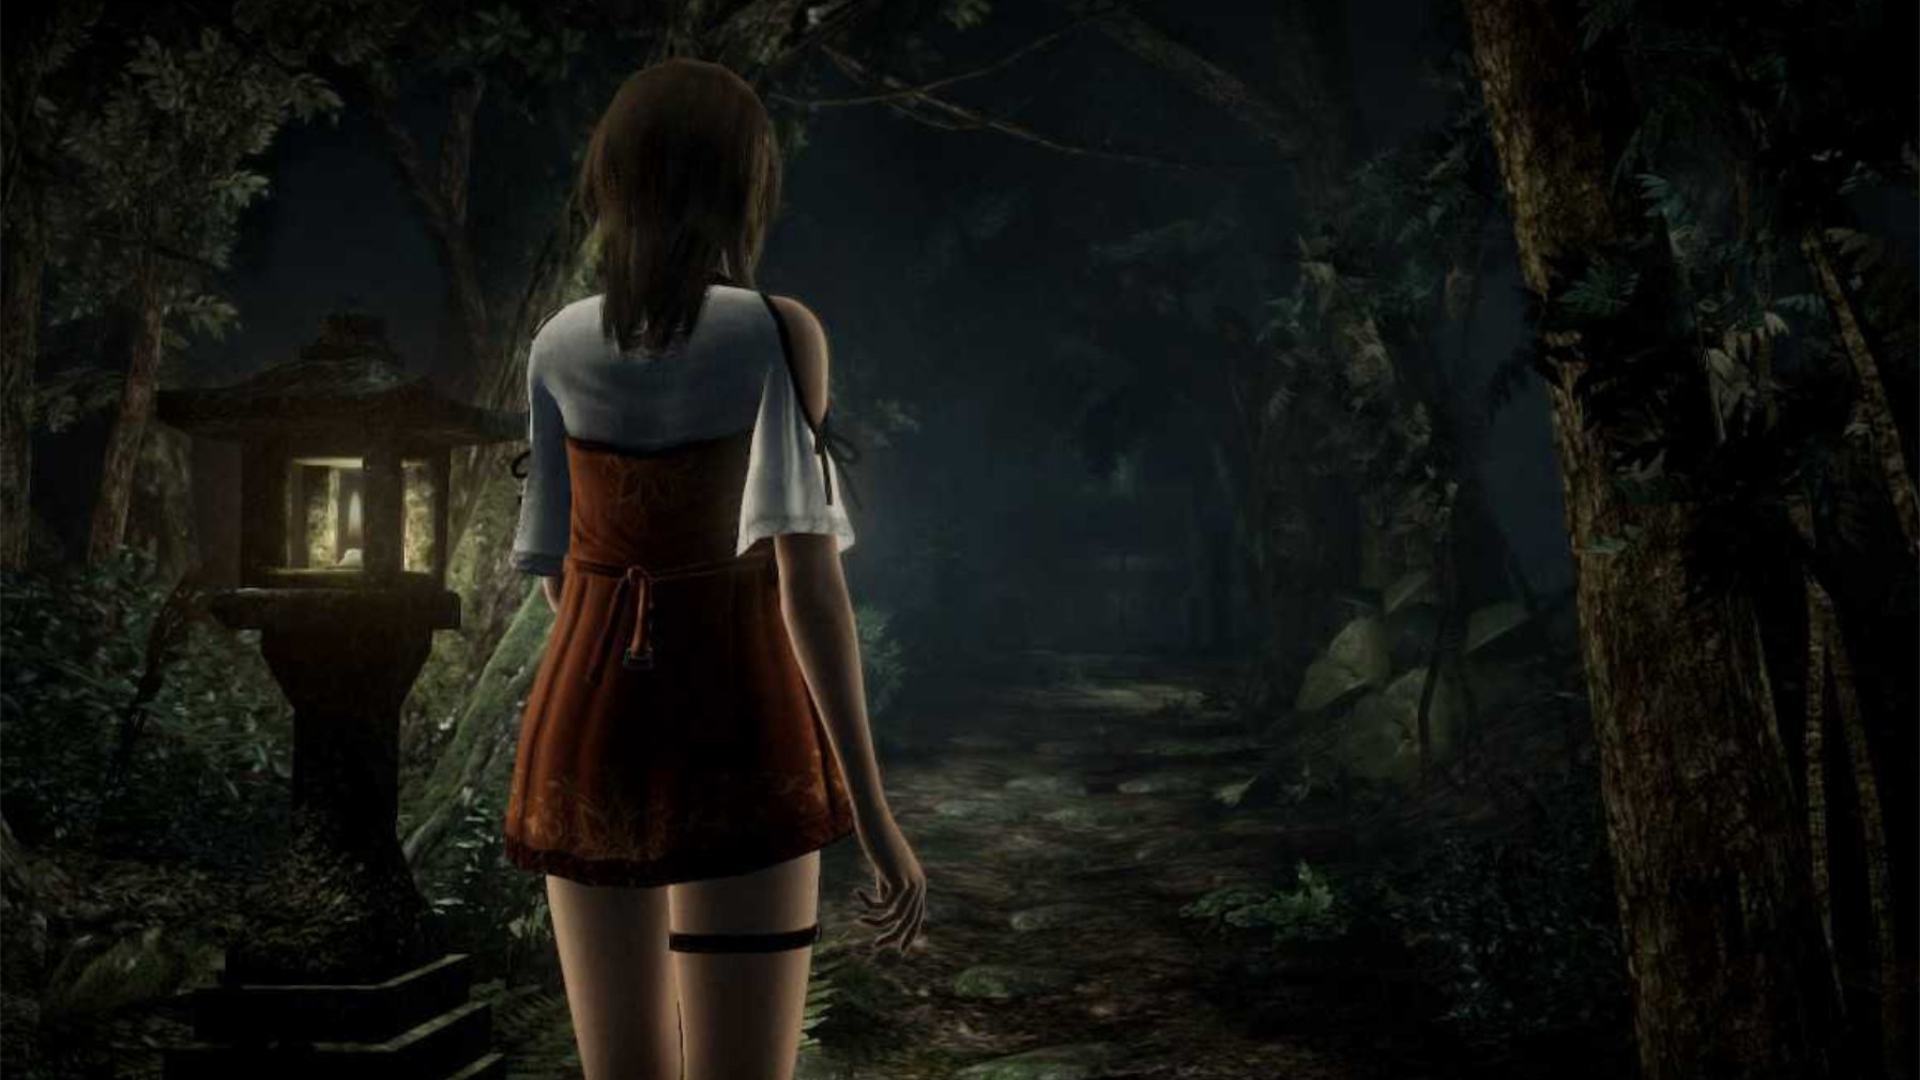 Yuri in a dark forest